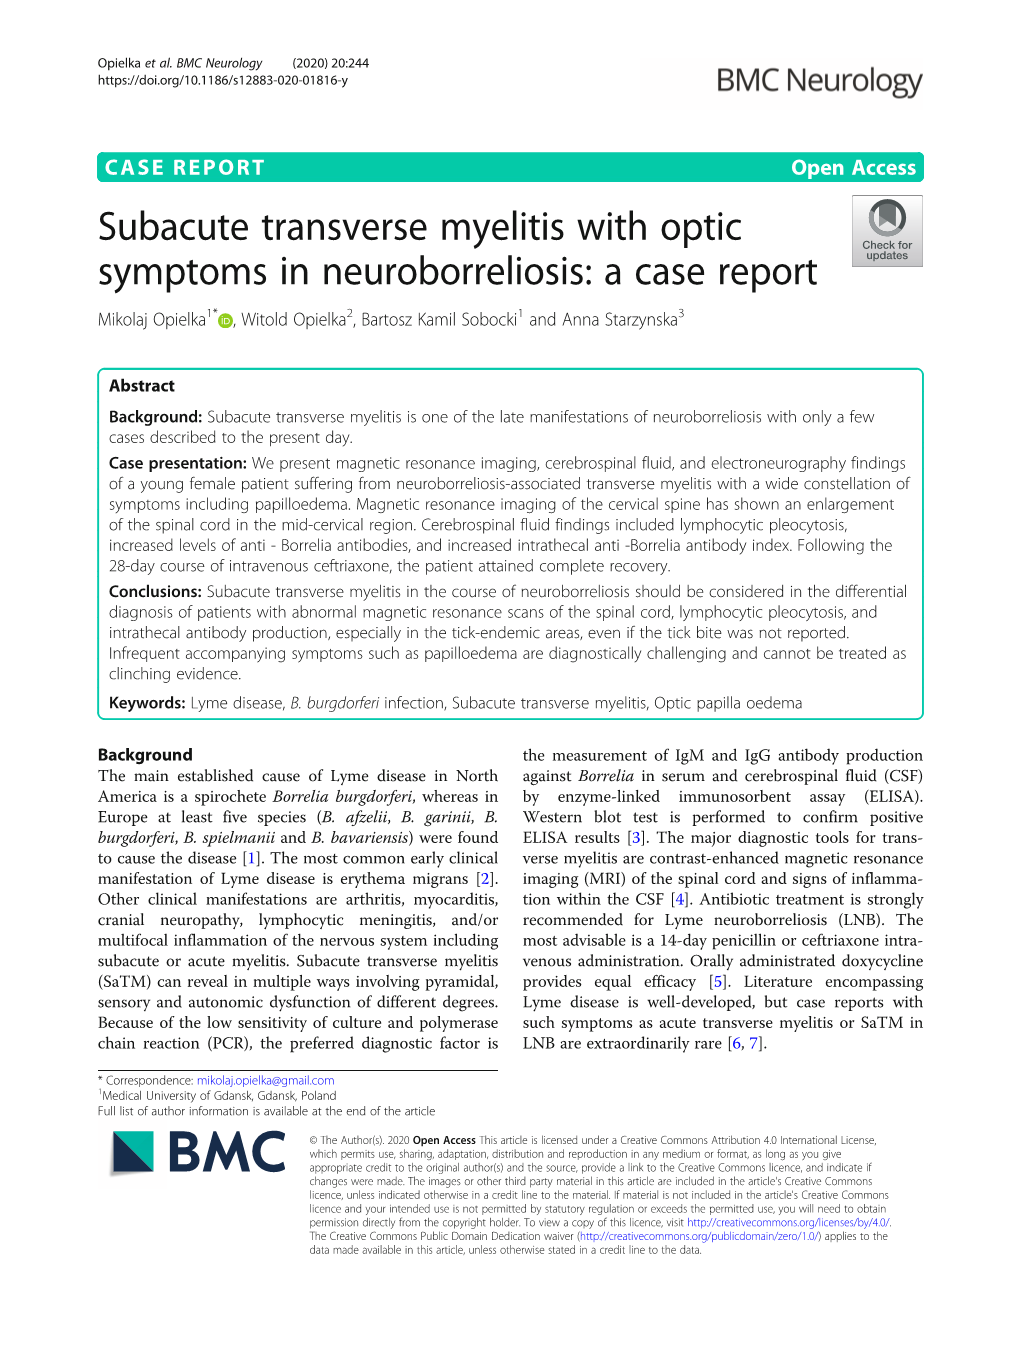 Subacute Transverse Myelitis with Optic Symptoms in Neuroborreliosis: a Case Report Mikolaj Opielka1* , Witold Opielka2, Bartosz Kamil Sobocki1 and Anna Starzynska3